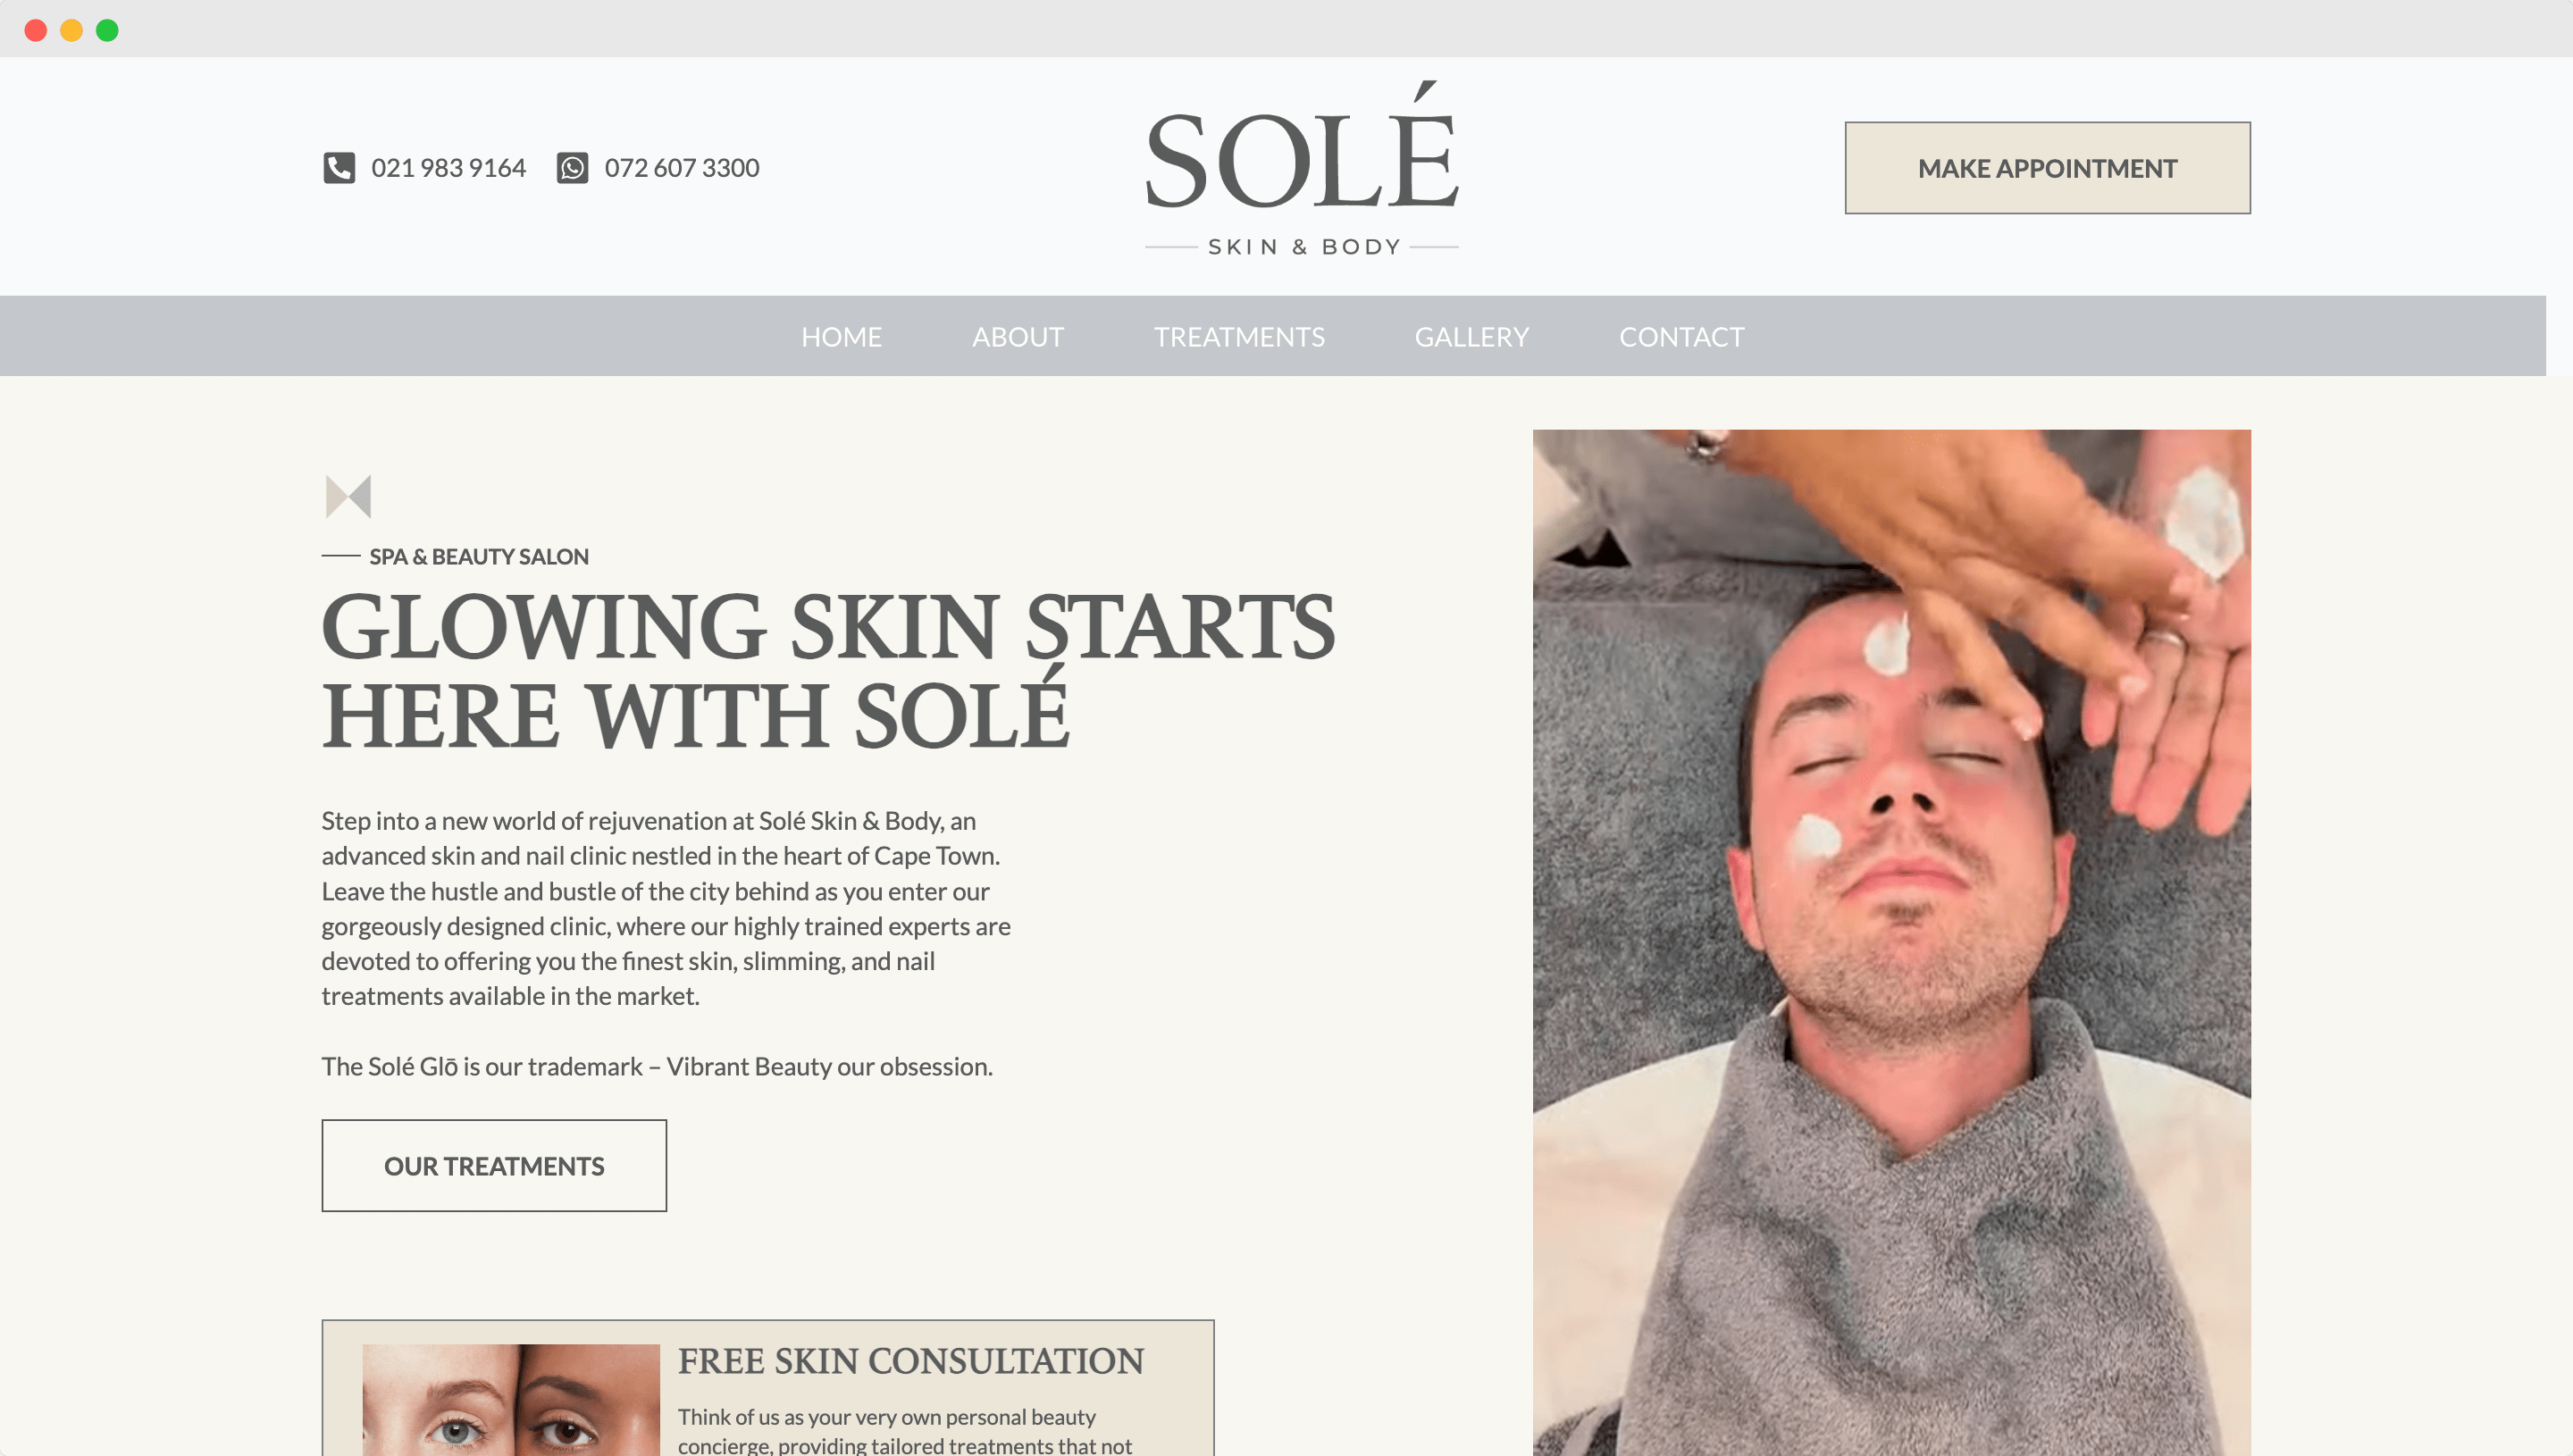 Solé Skin & Body